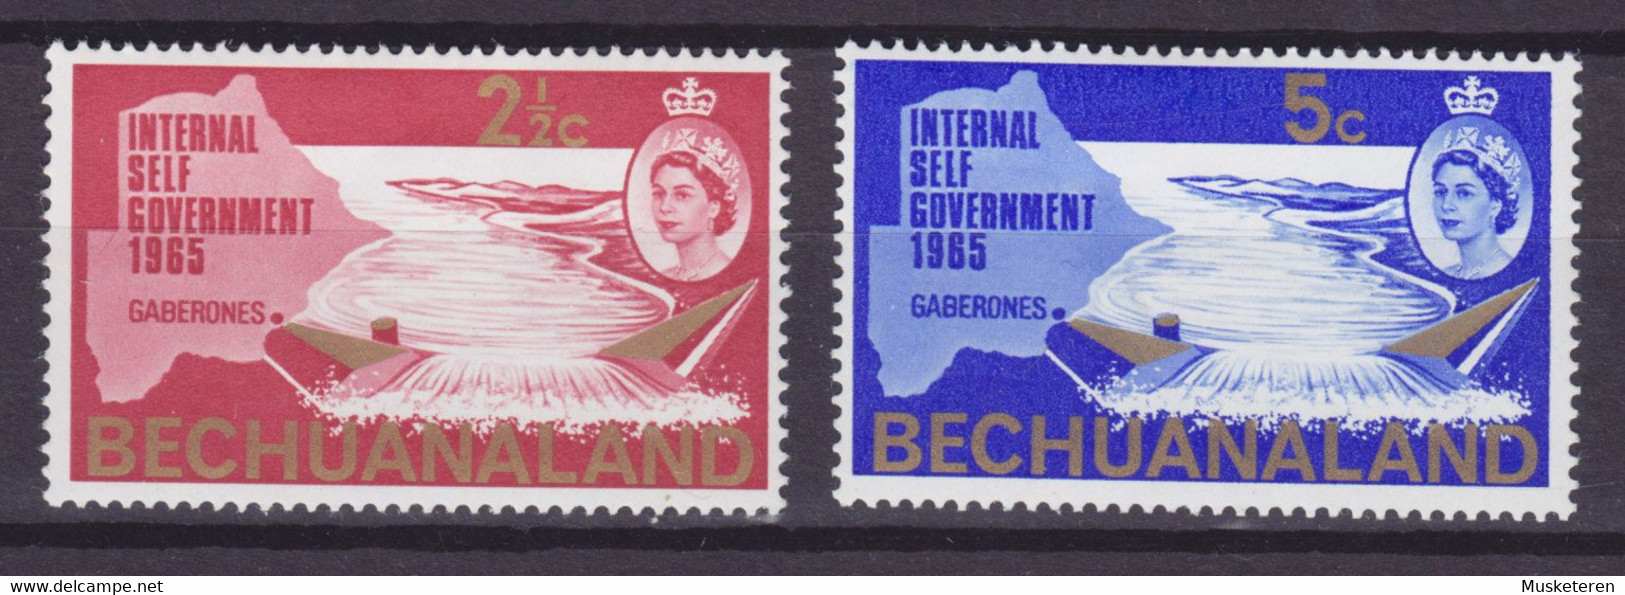 Bechuanaland 1965 Mi. 173-74    2c. & 5c. Self Government Landkarte Notwani River, MH** - 1965-1966 Autonomia Interna